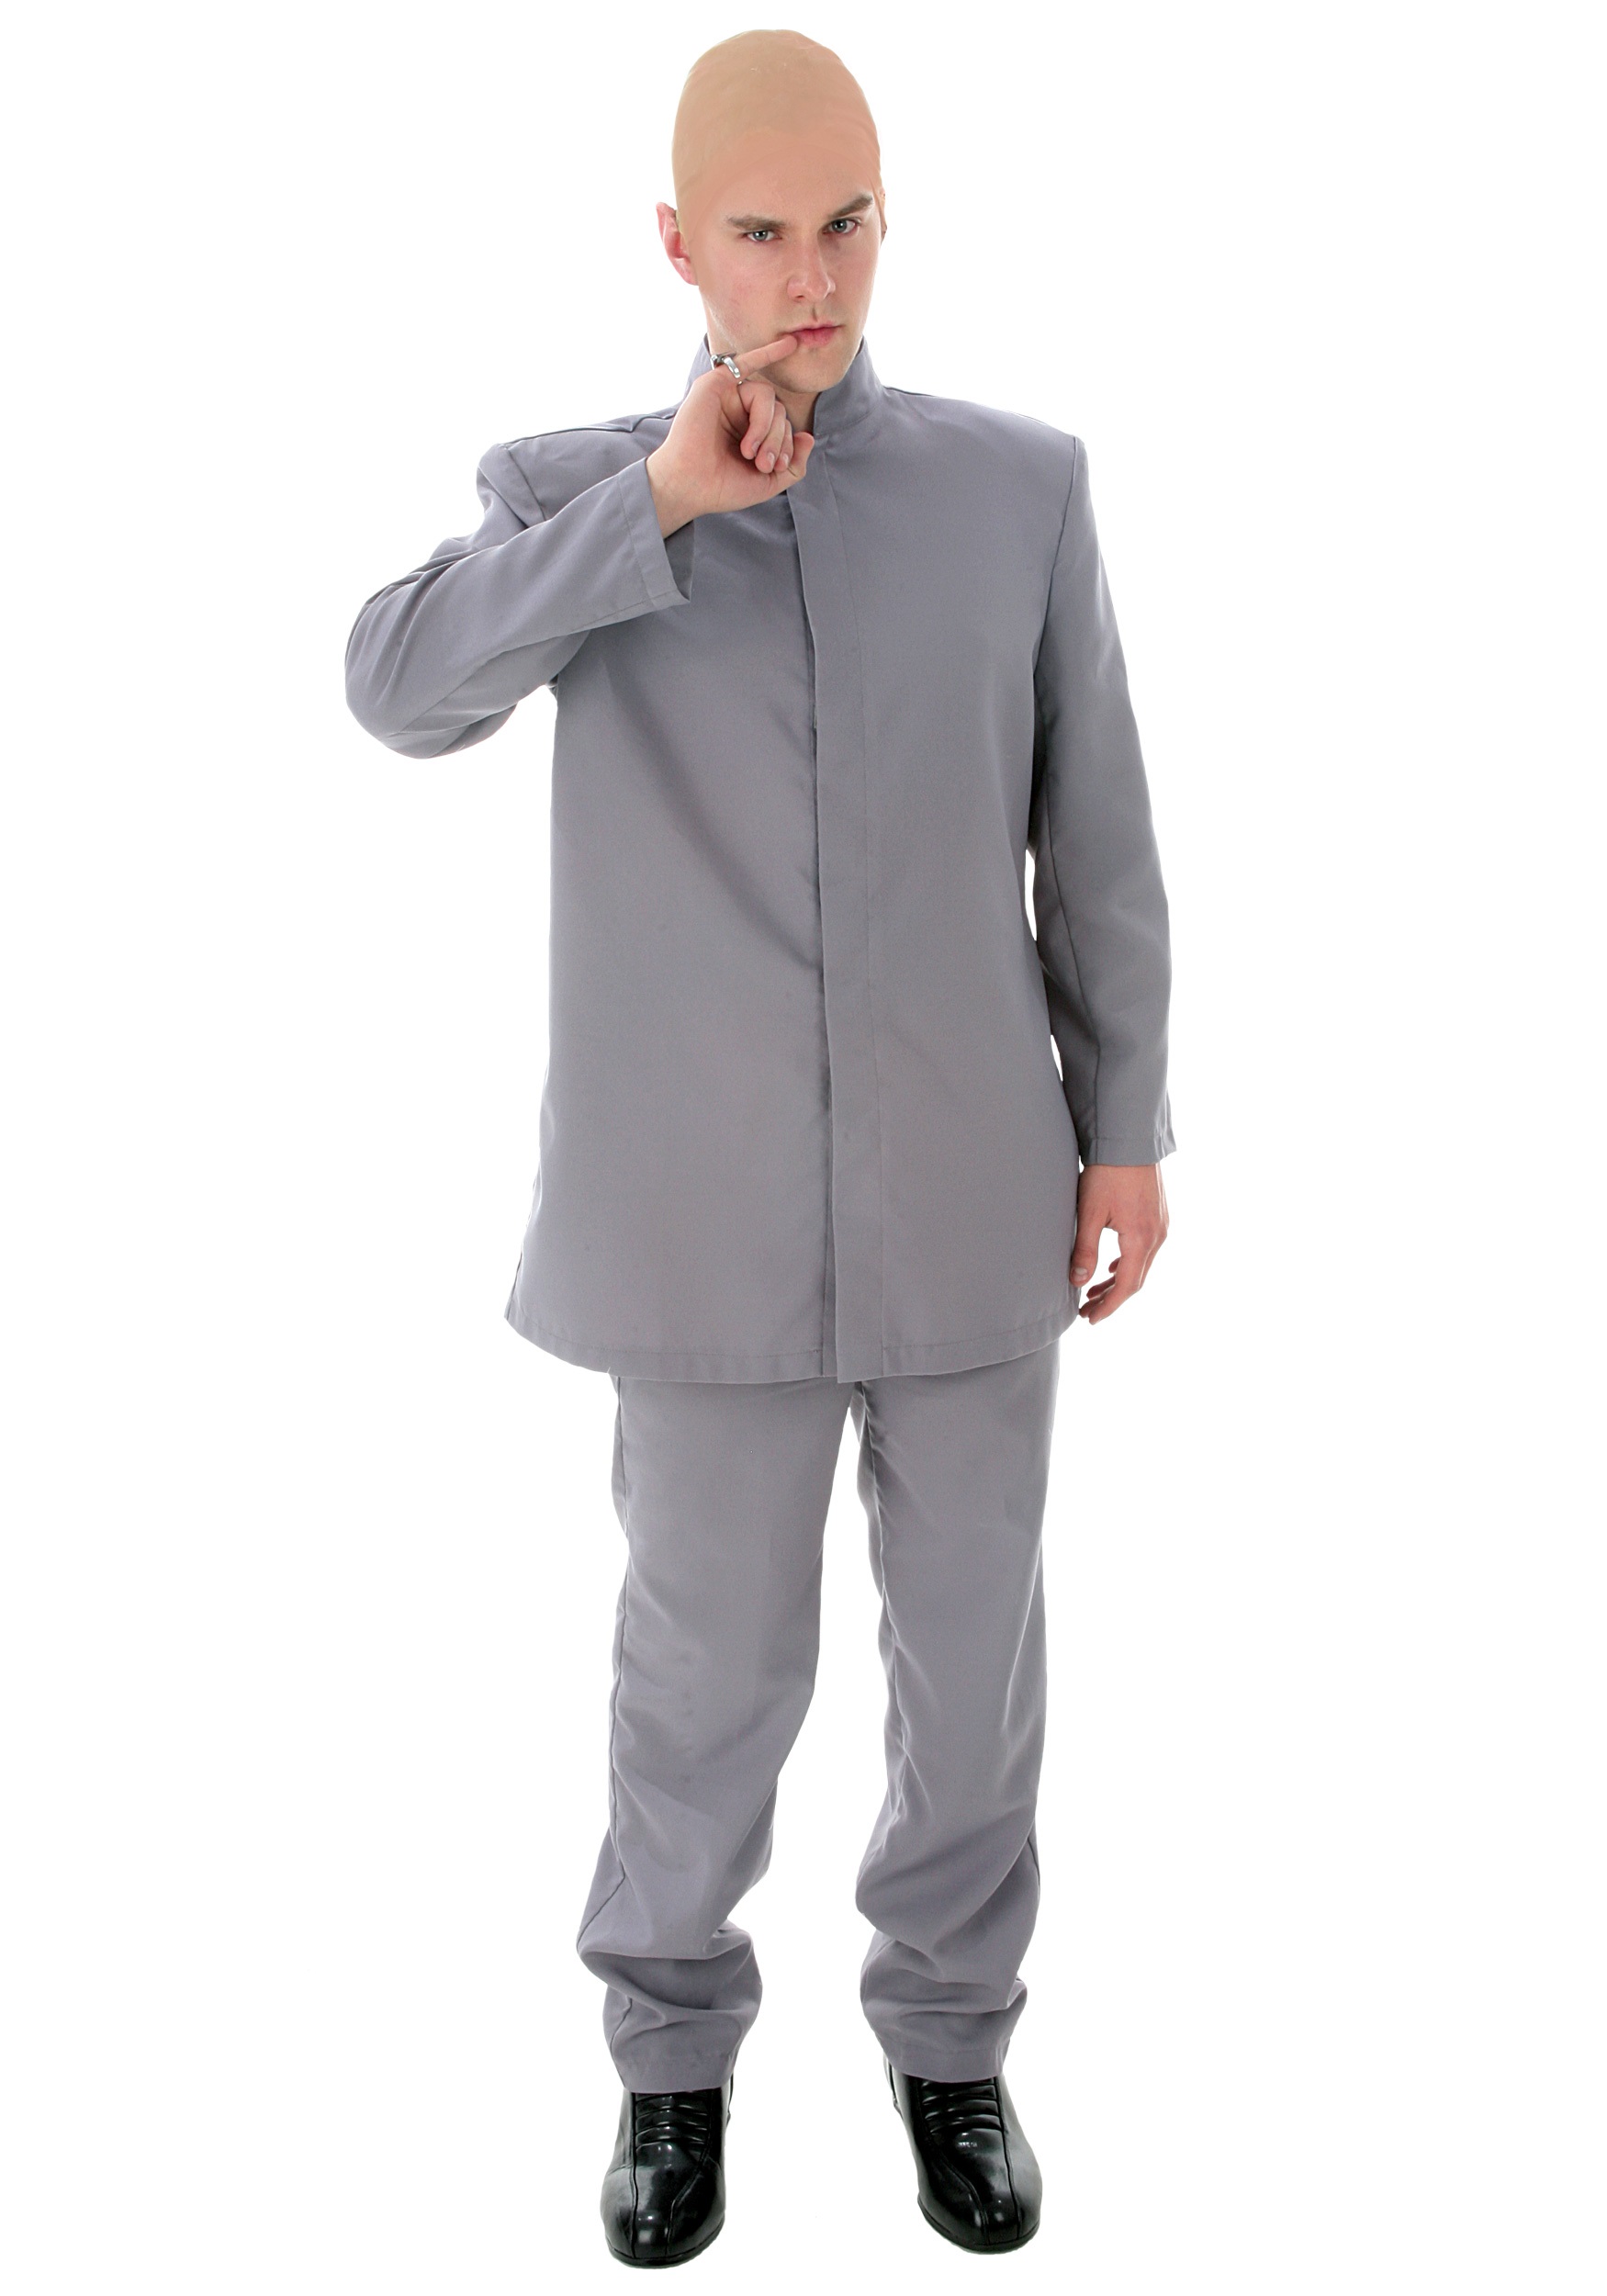 Plus Size Gray Suit Costume